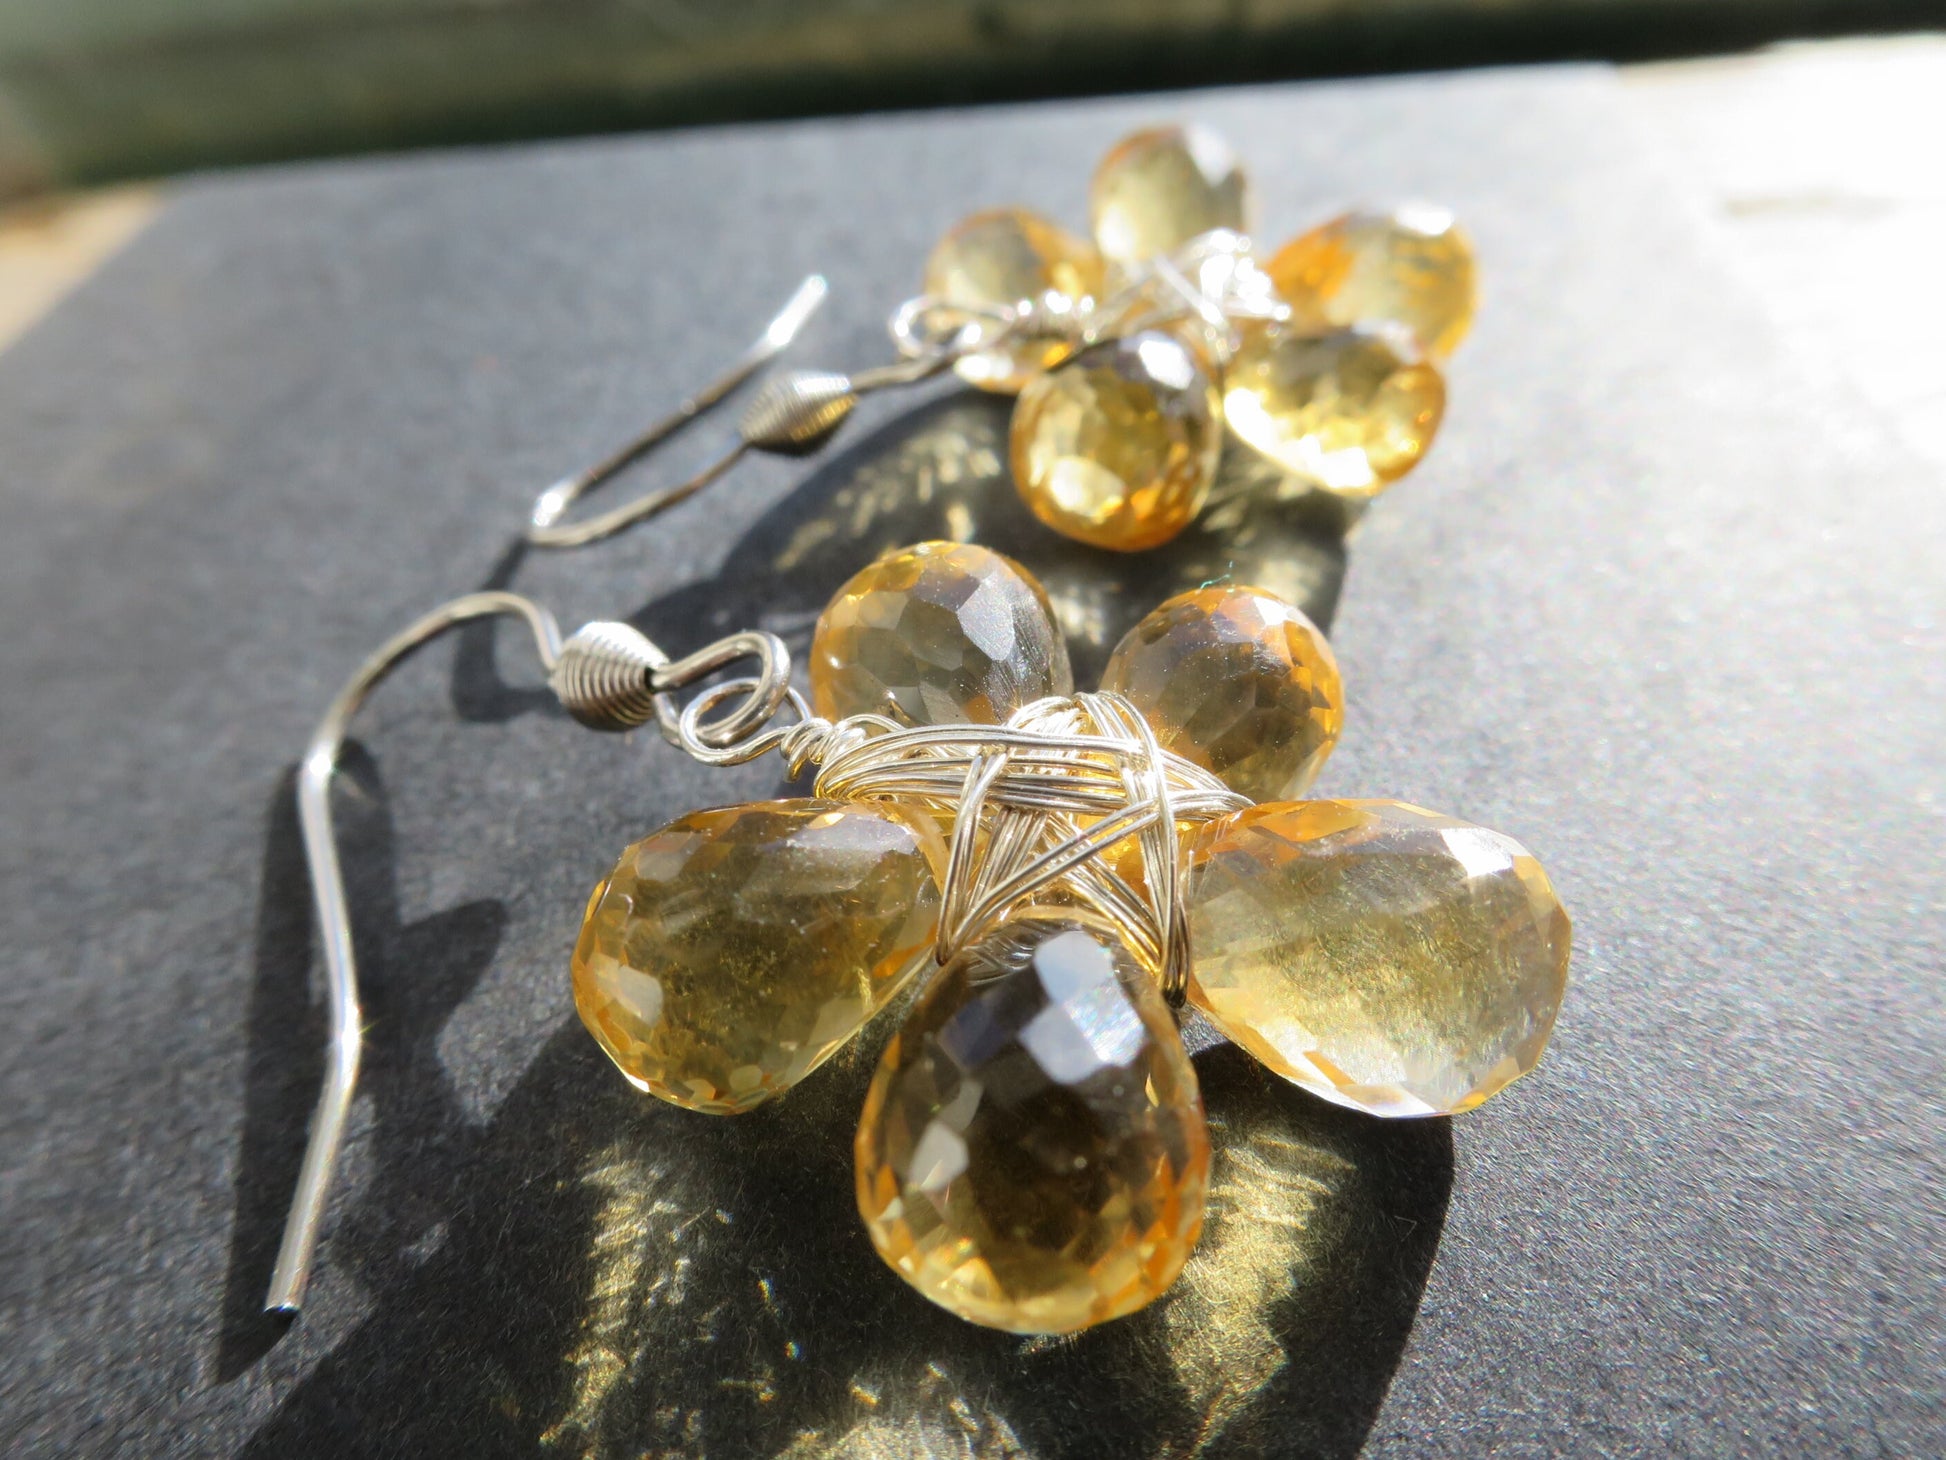 Unique earrings citrine Flower gemstones drops brioletten Stainless steel ear hooks 925 Sterling Silver wire handmade natural gemstones